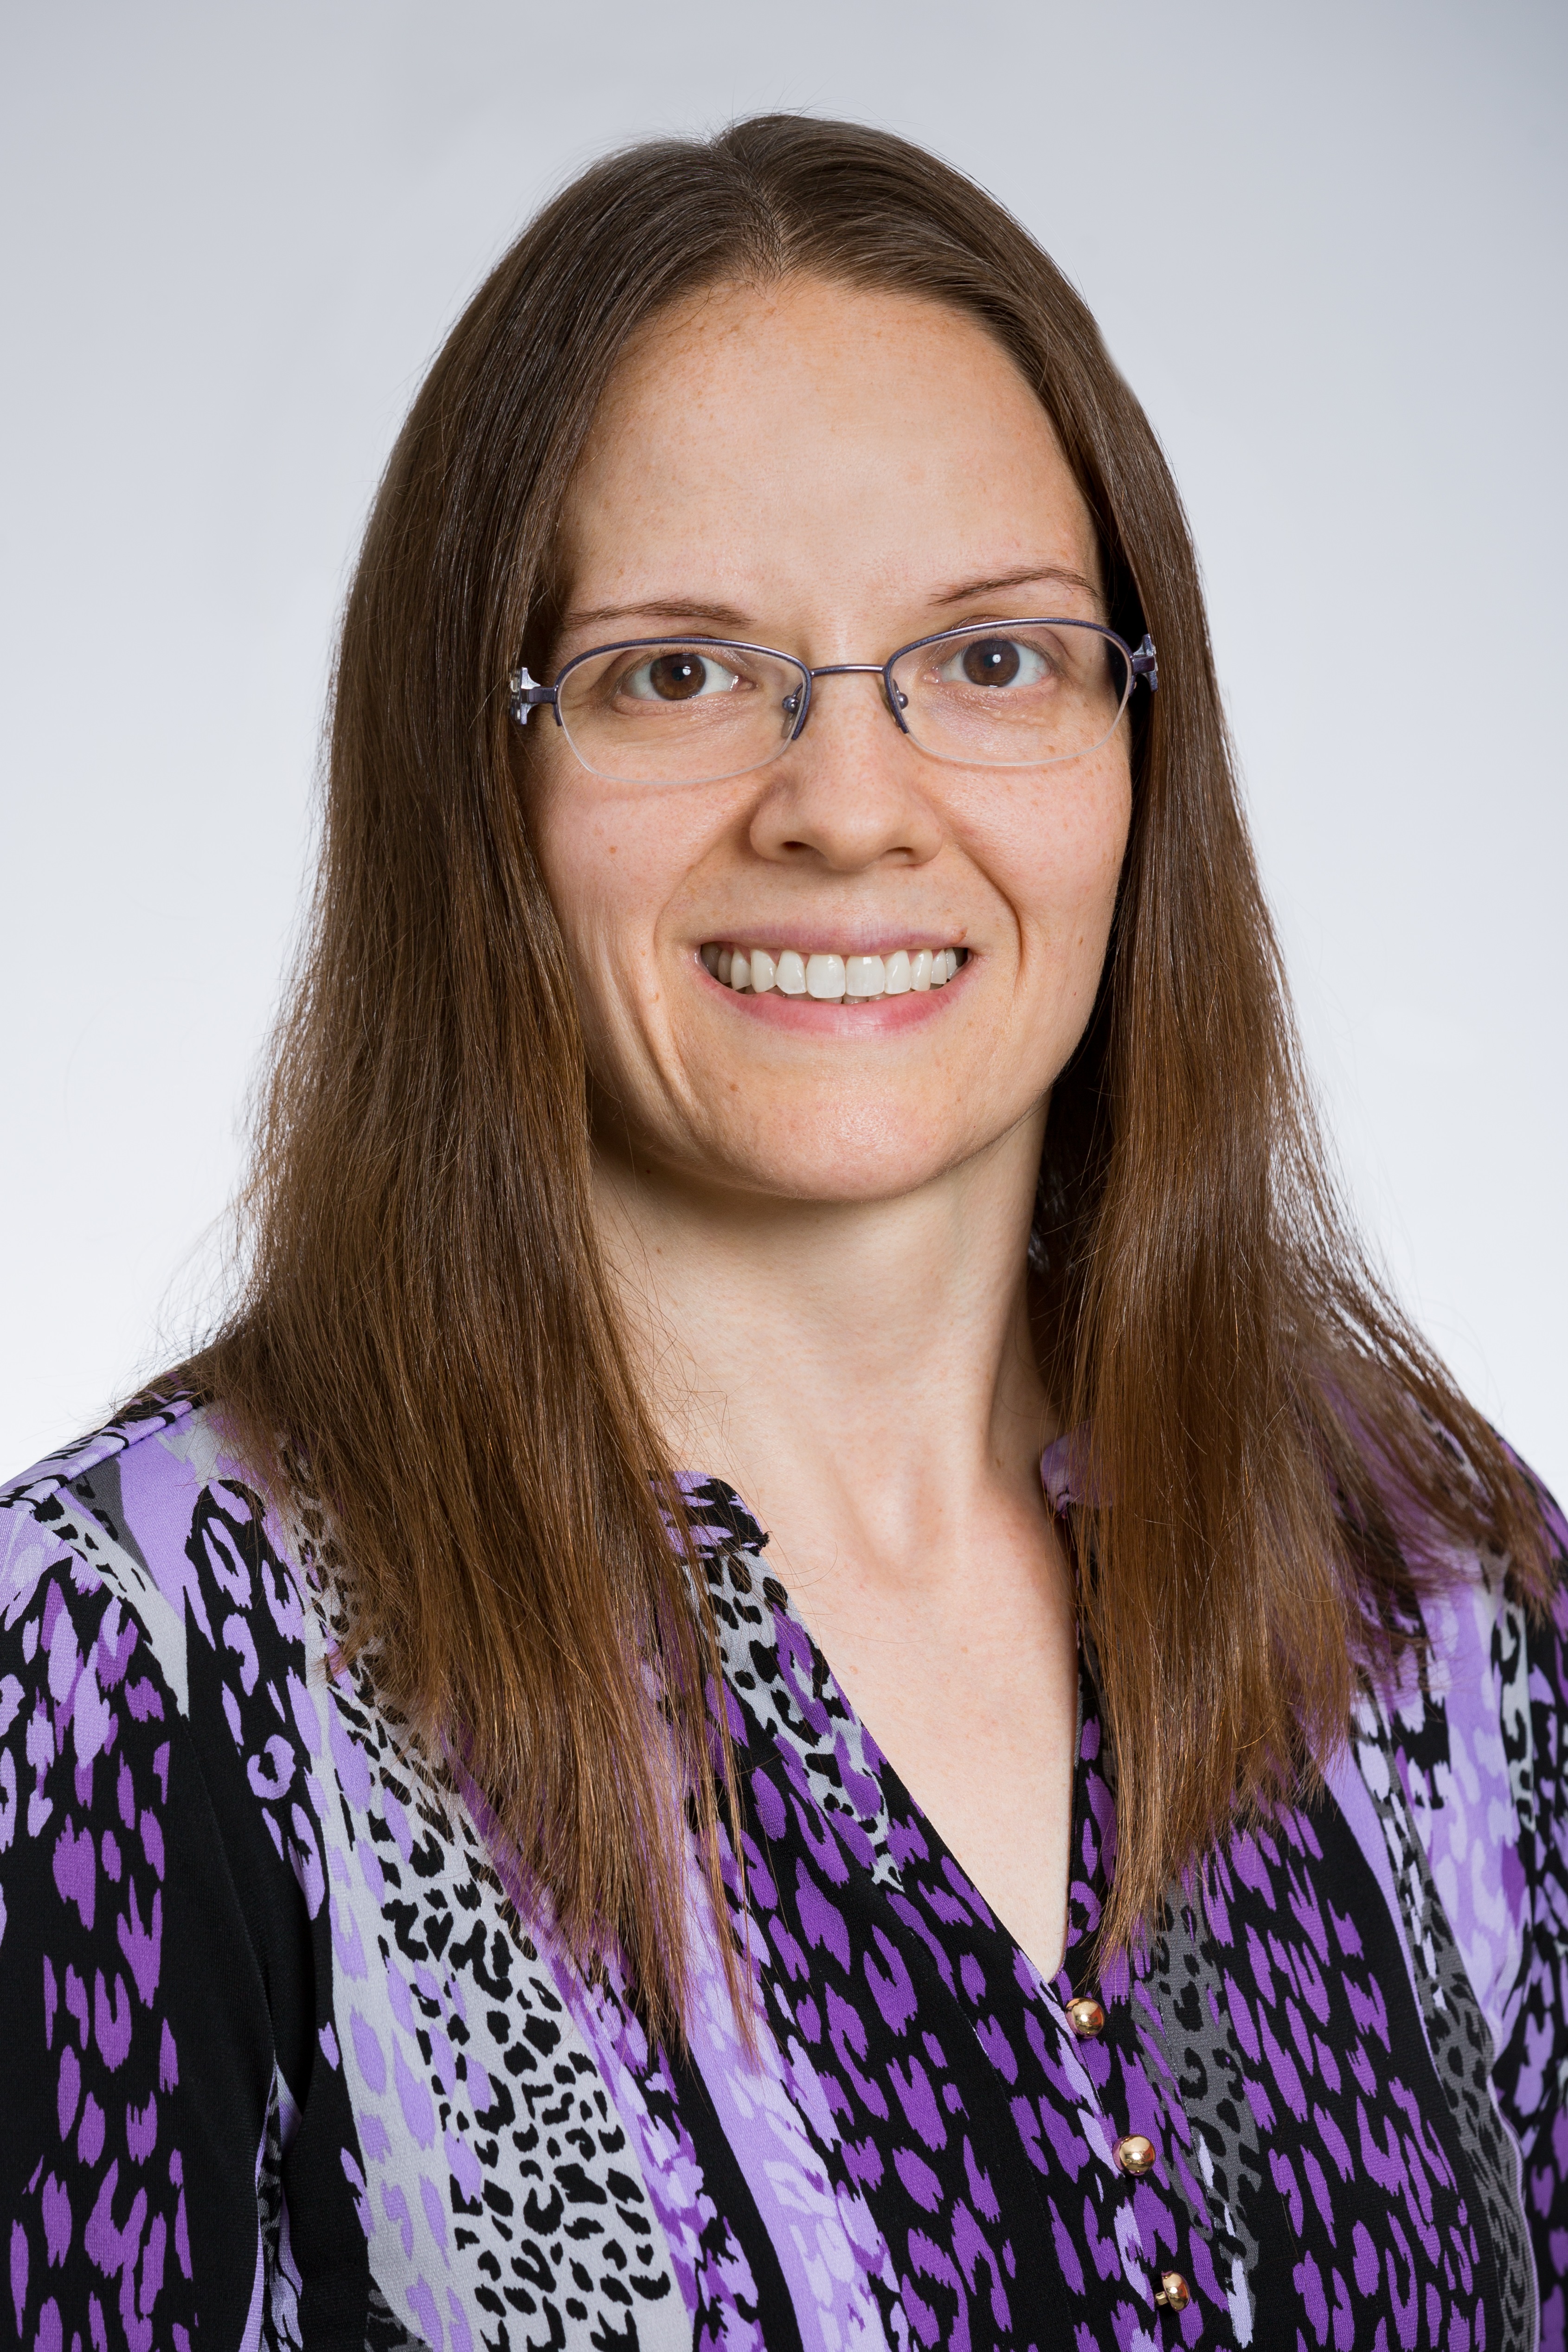 Dr. Valerie Carabetta, assistant professor of biomedical sciences